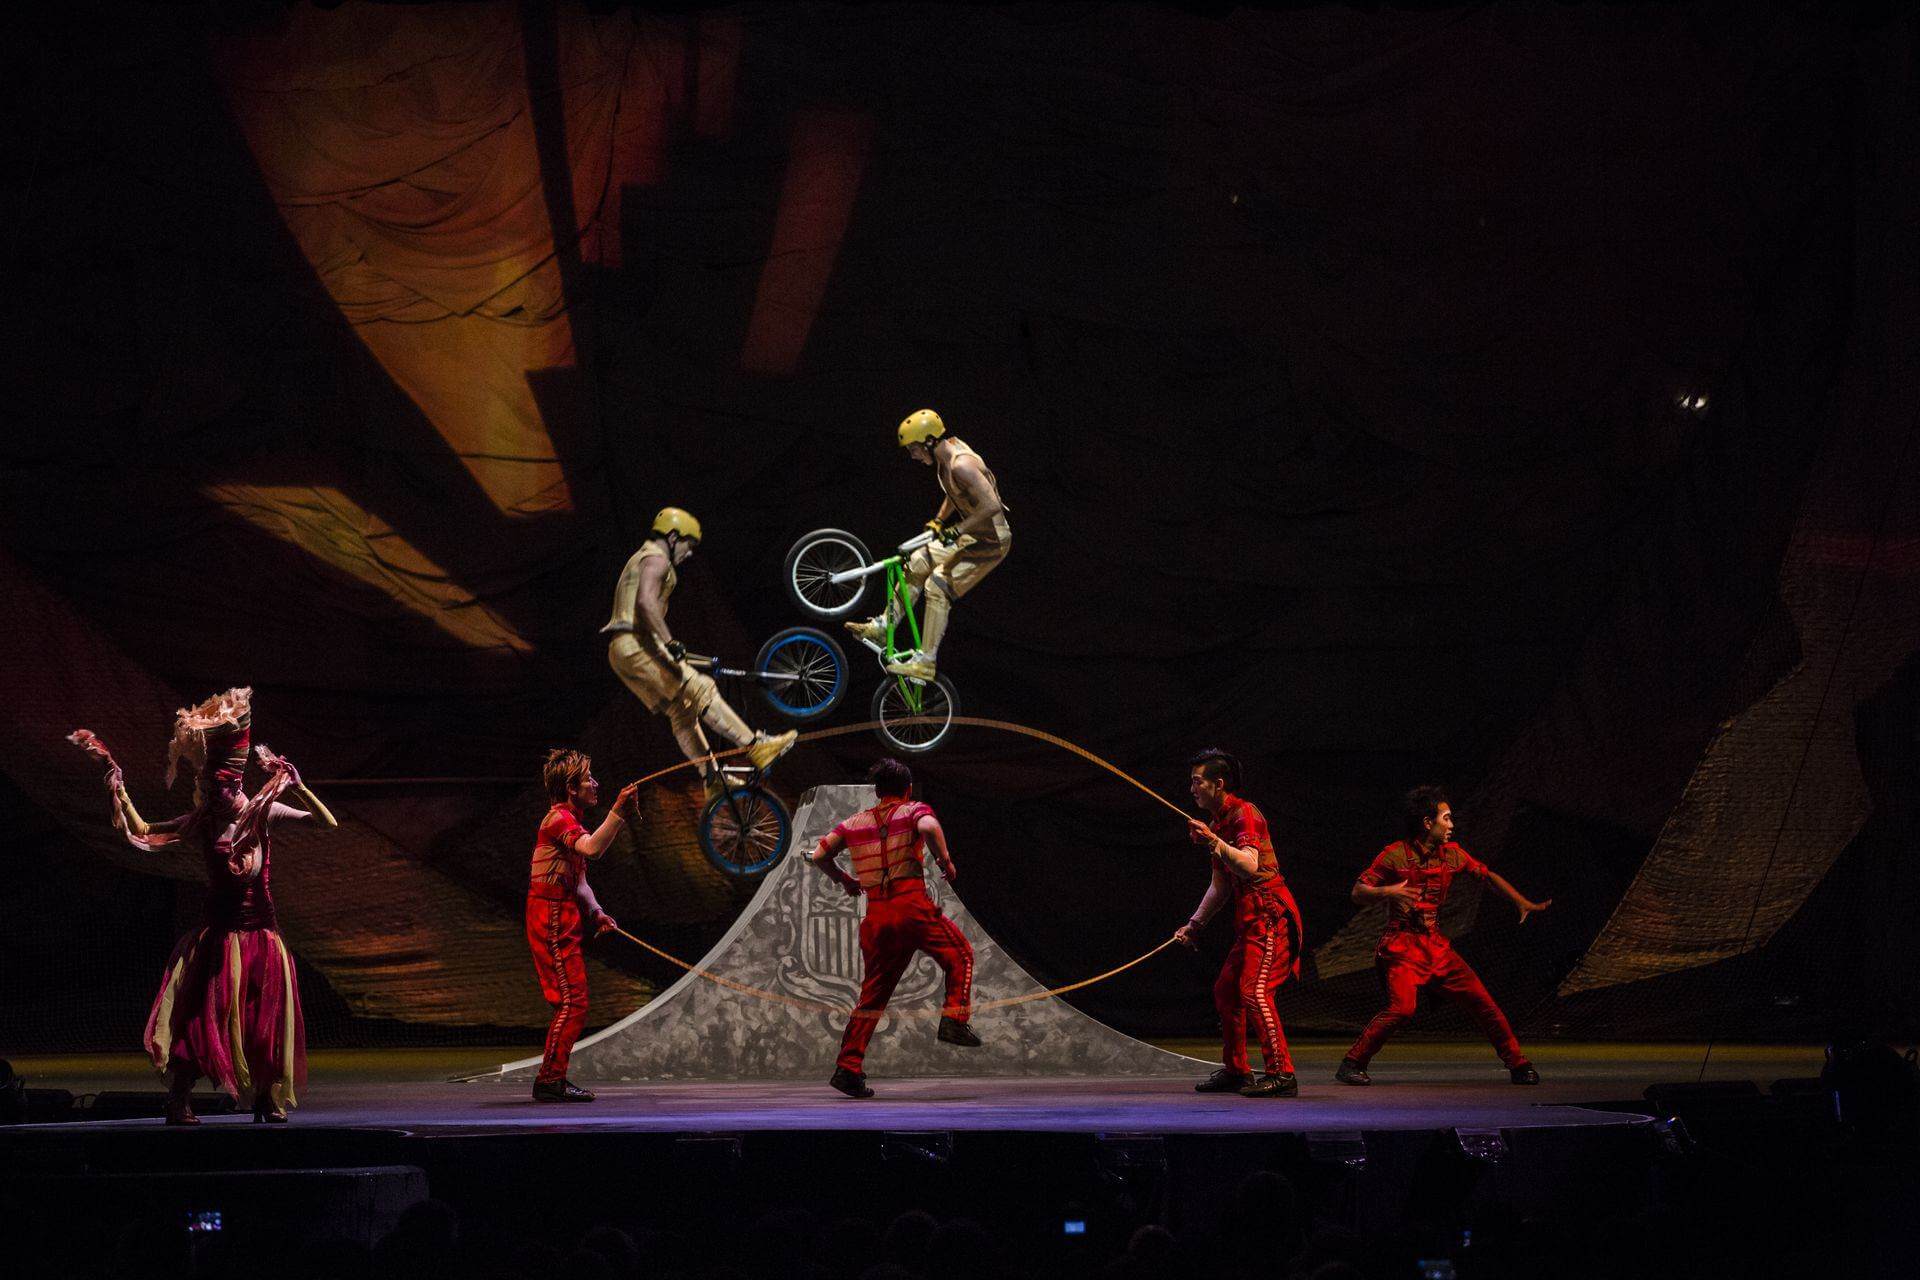 Scalada by Cirque du Soleil 2013: Acrobatics with bicycles